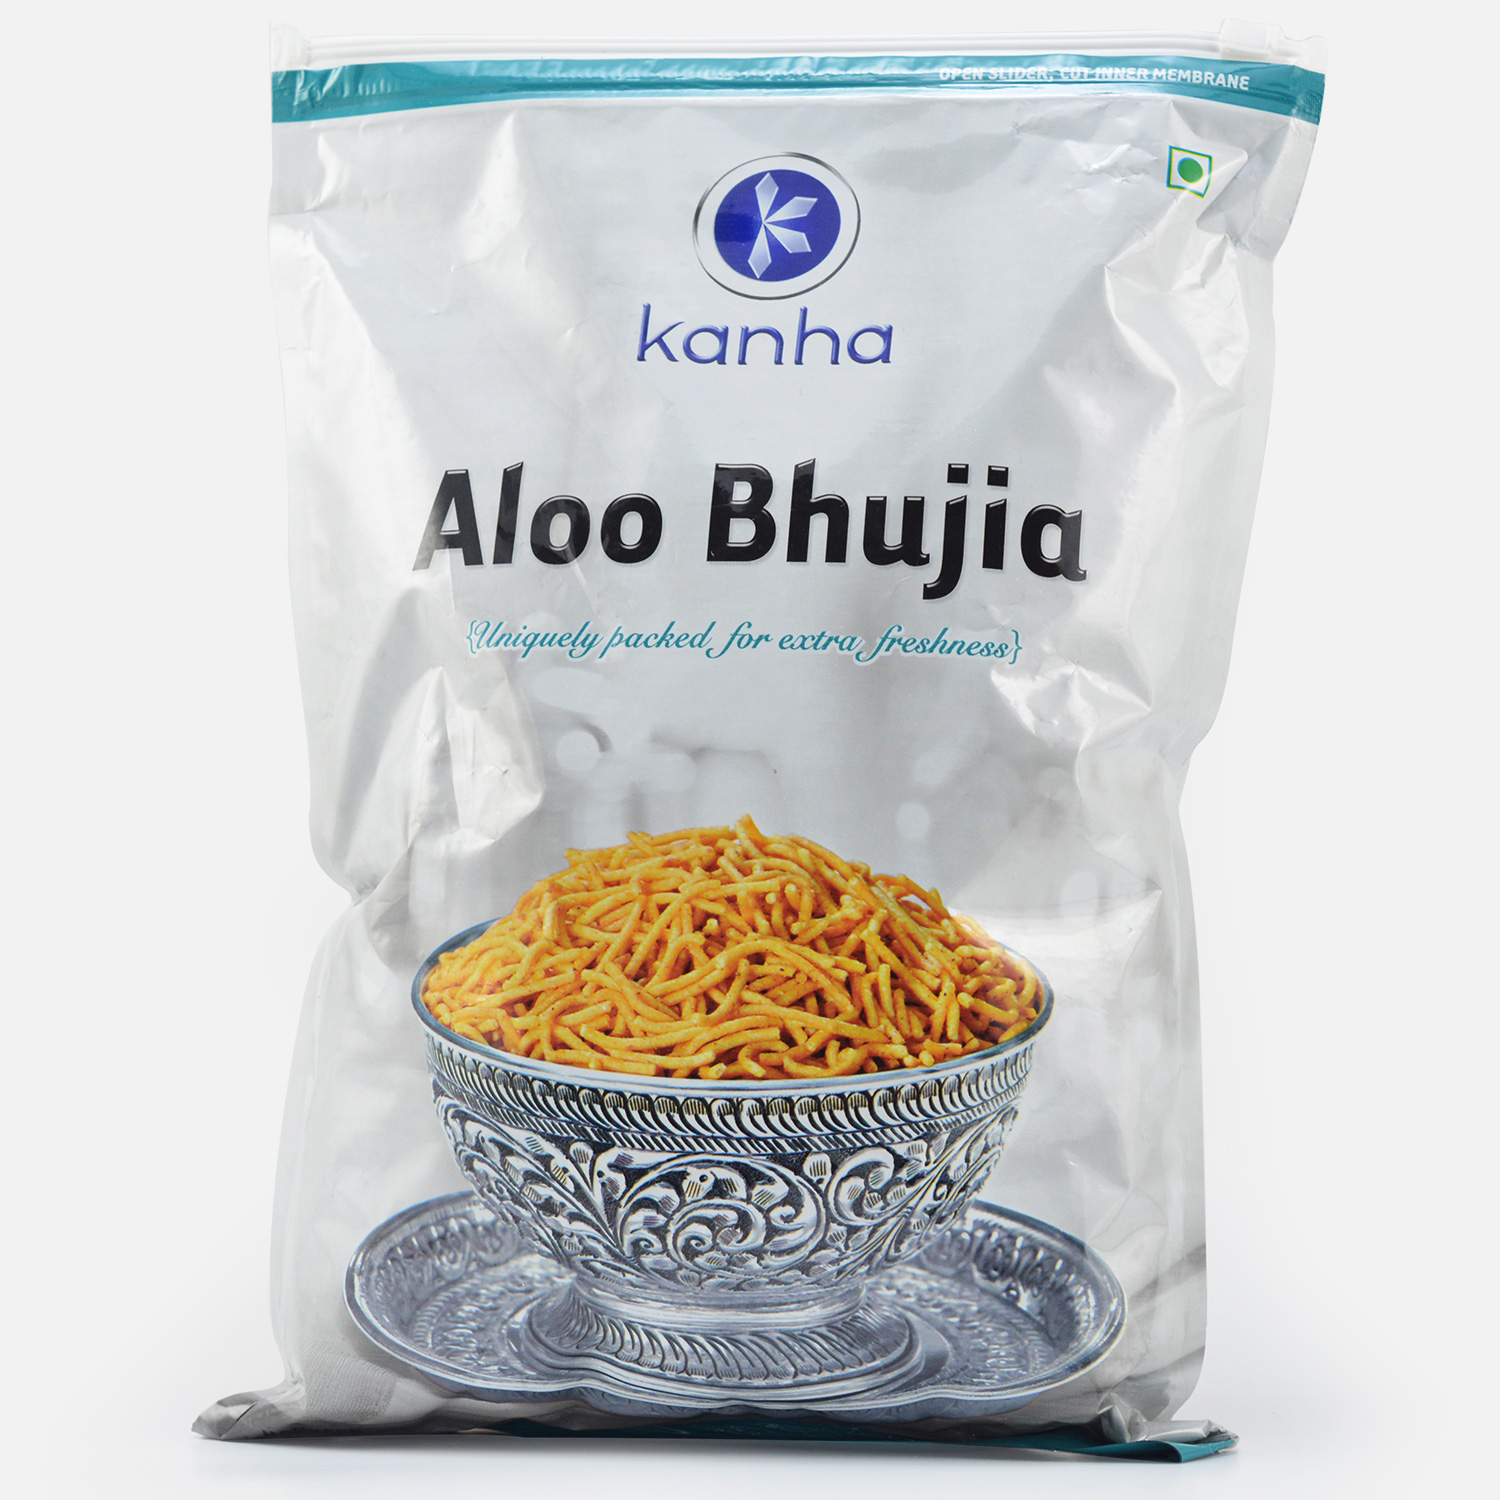 Tasty Kanha Aloo Bhujia Namkeen